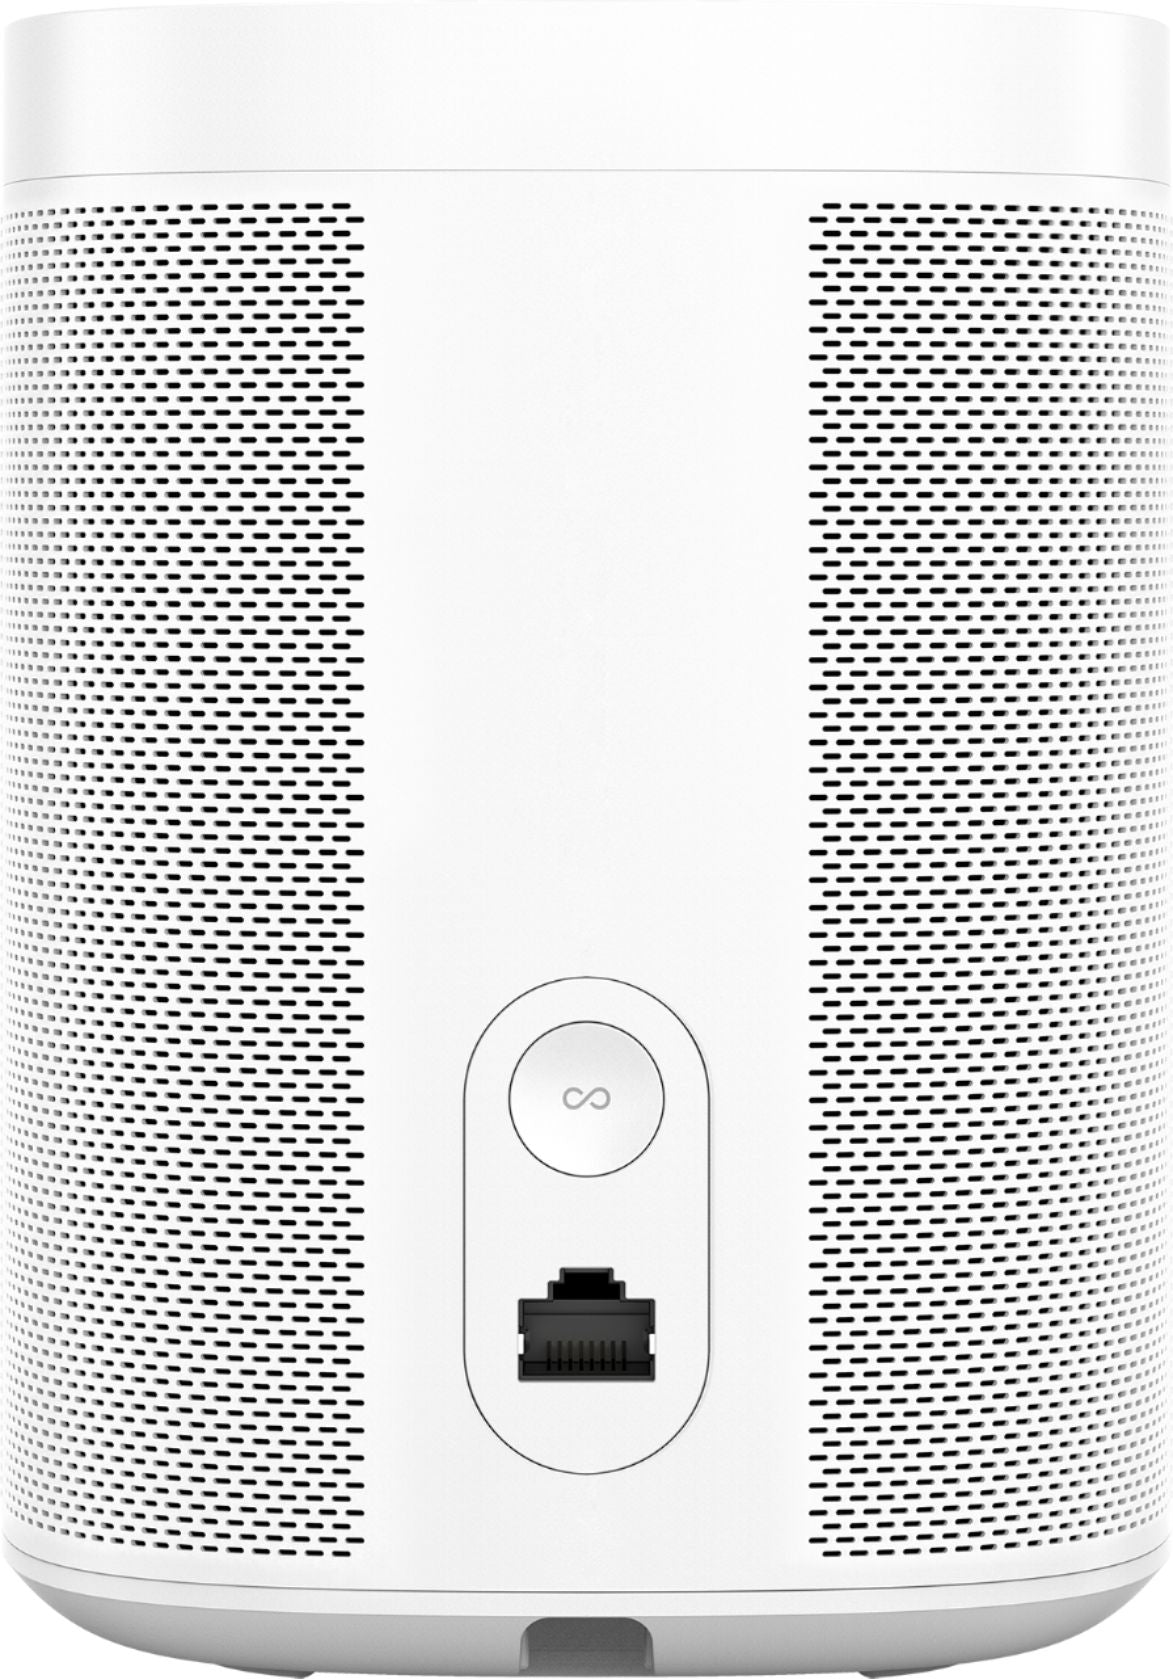 Sonos - One (Gen 2) Smart Speaker with Voice Control built-in - White